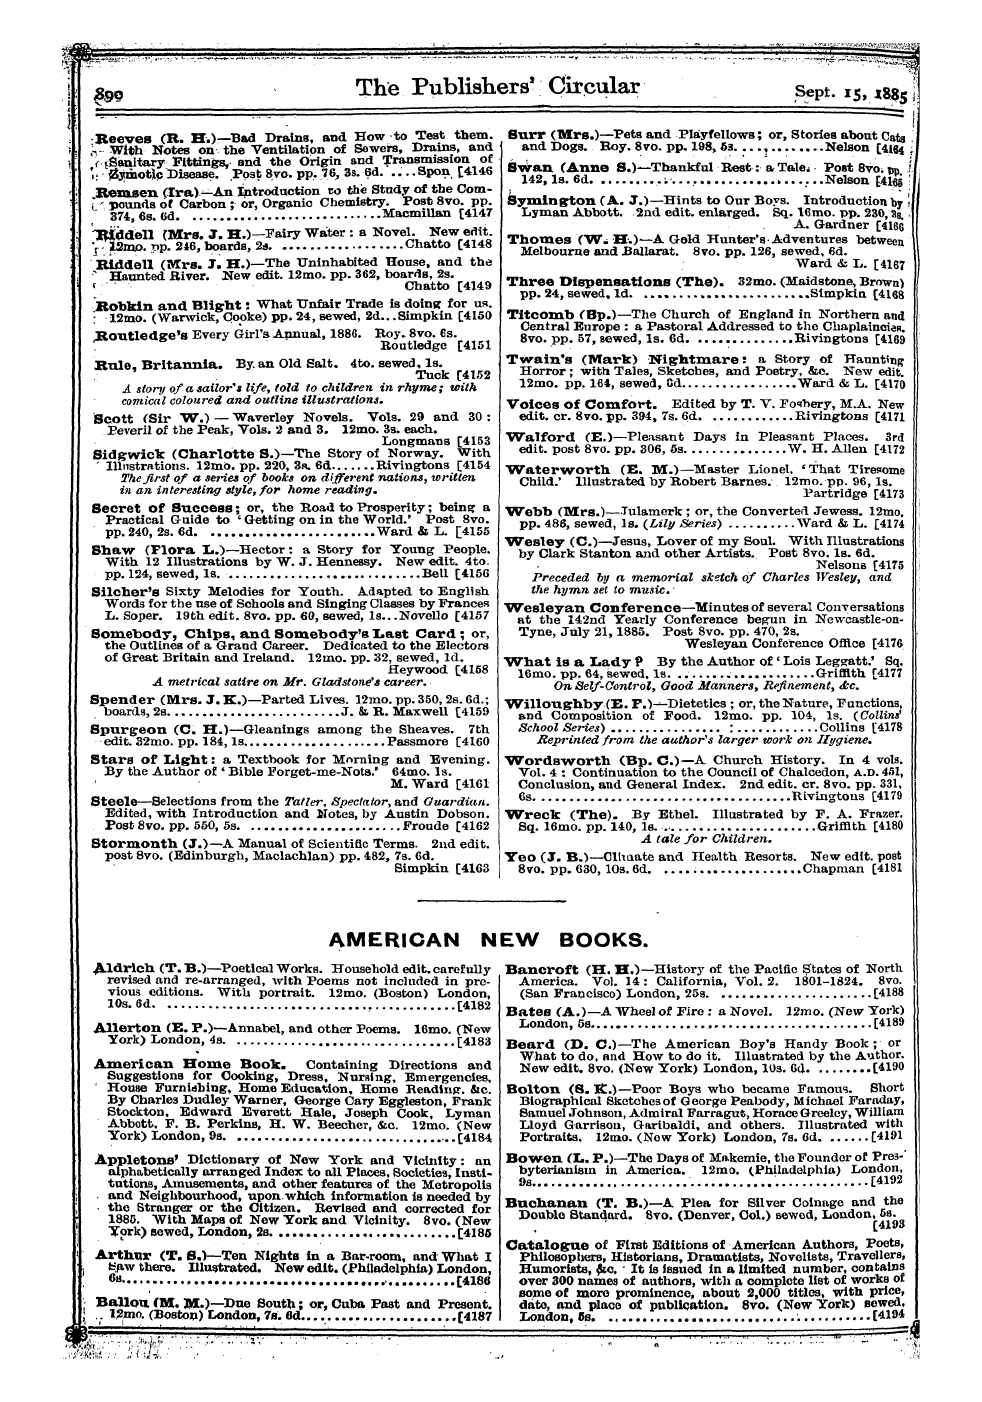 Publishers’ Circular (1880-1890): jS F Y, 1st edition: 18